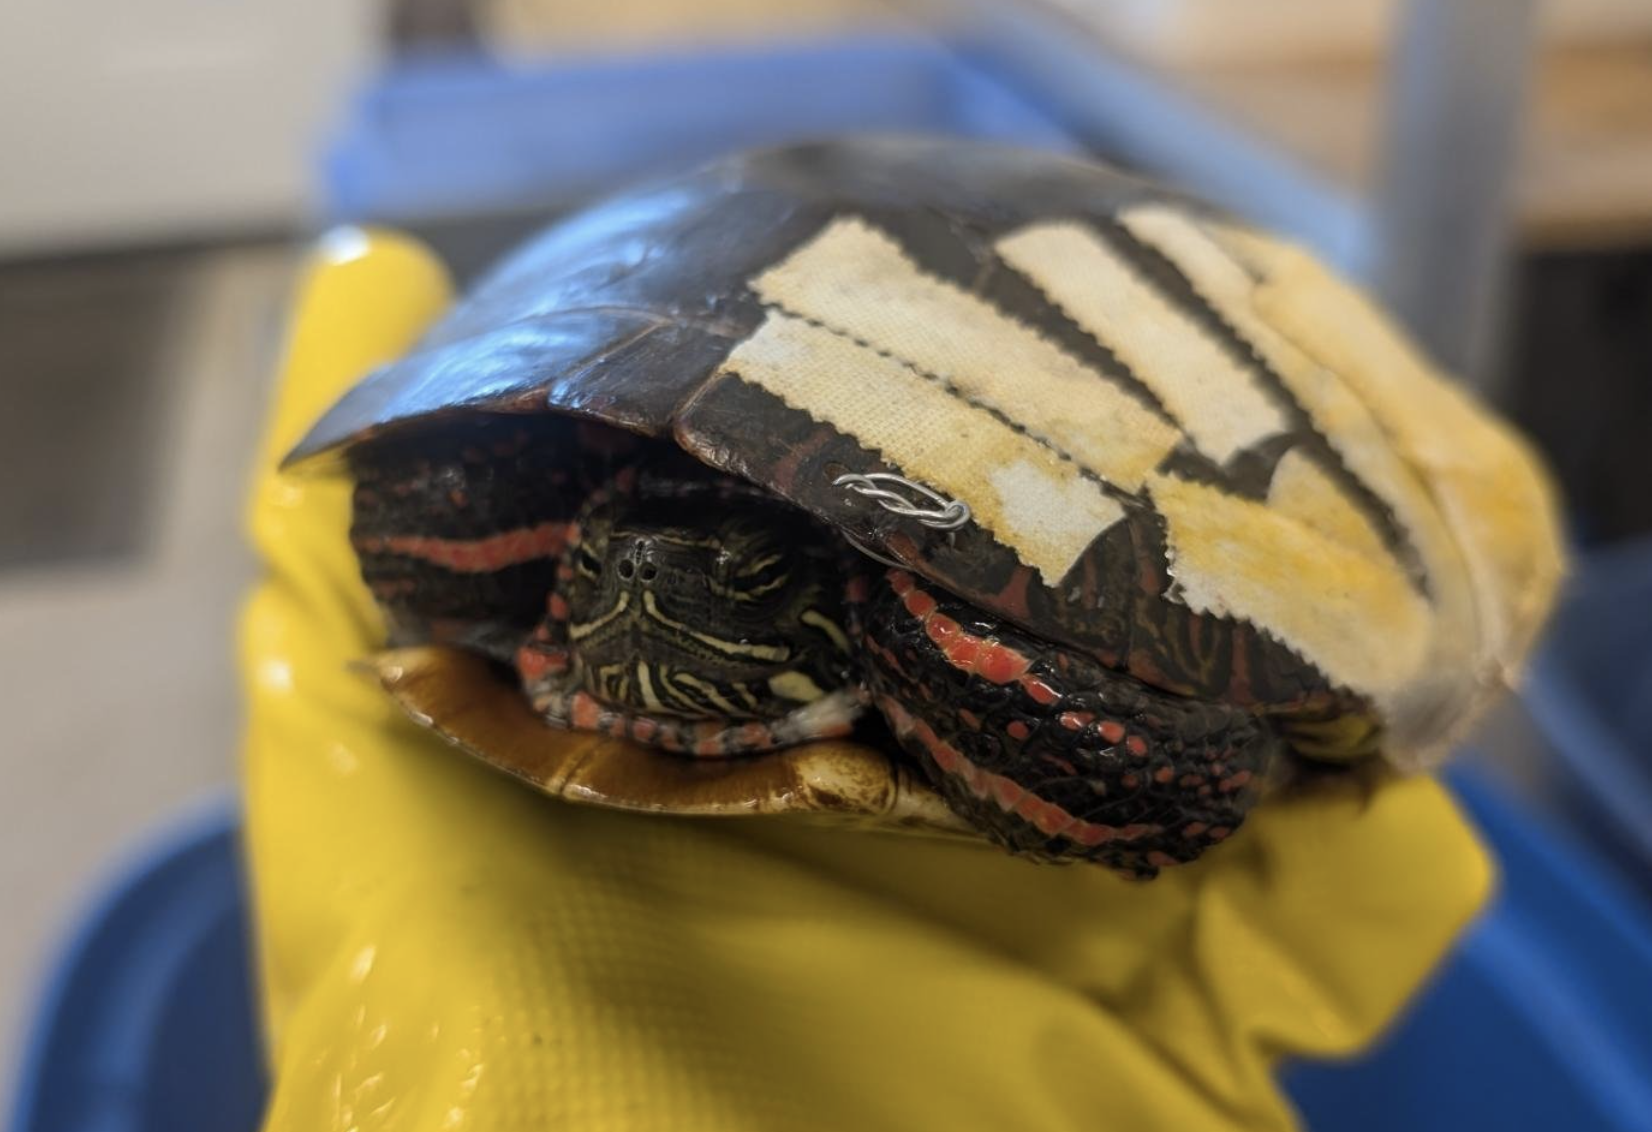 As turtle injuries surge, Ontario drivers urged to slow down during nesting season